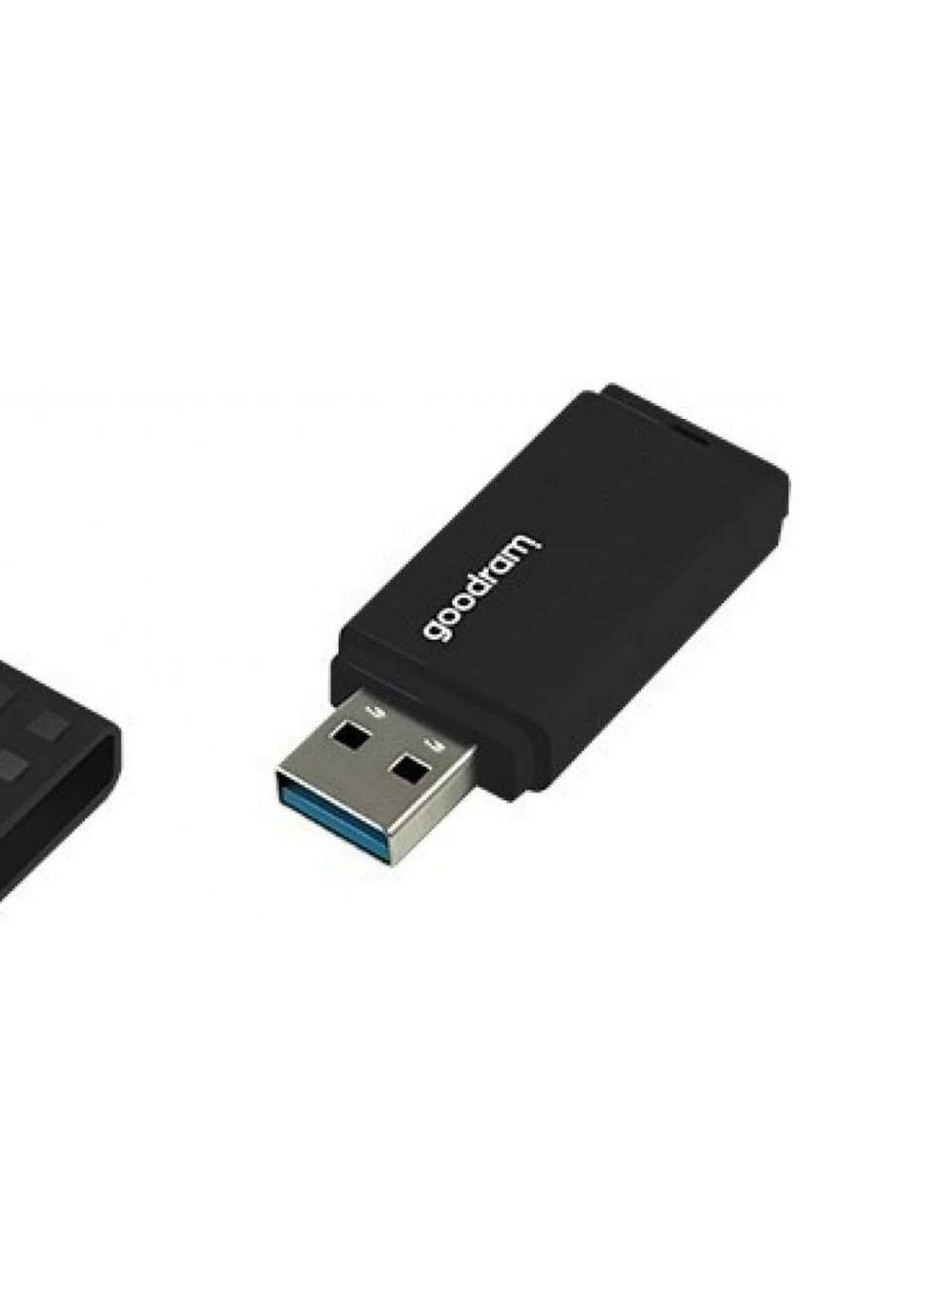 USB флеш накопитель (UME3-0320K0R11) Goodram 32gb ume3 black usb 3.0 (232750151)